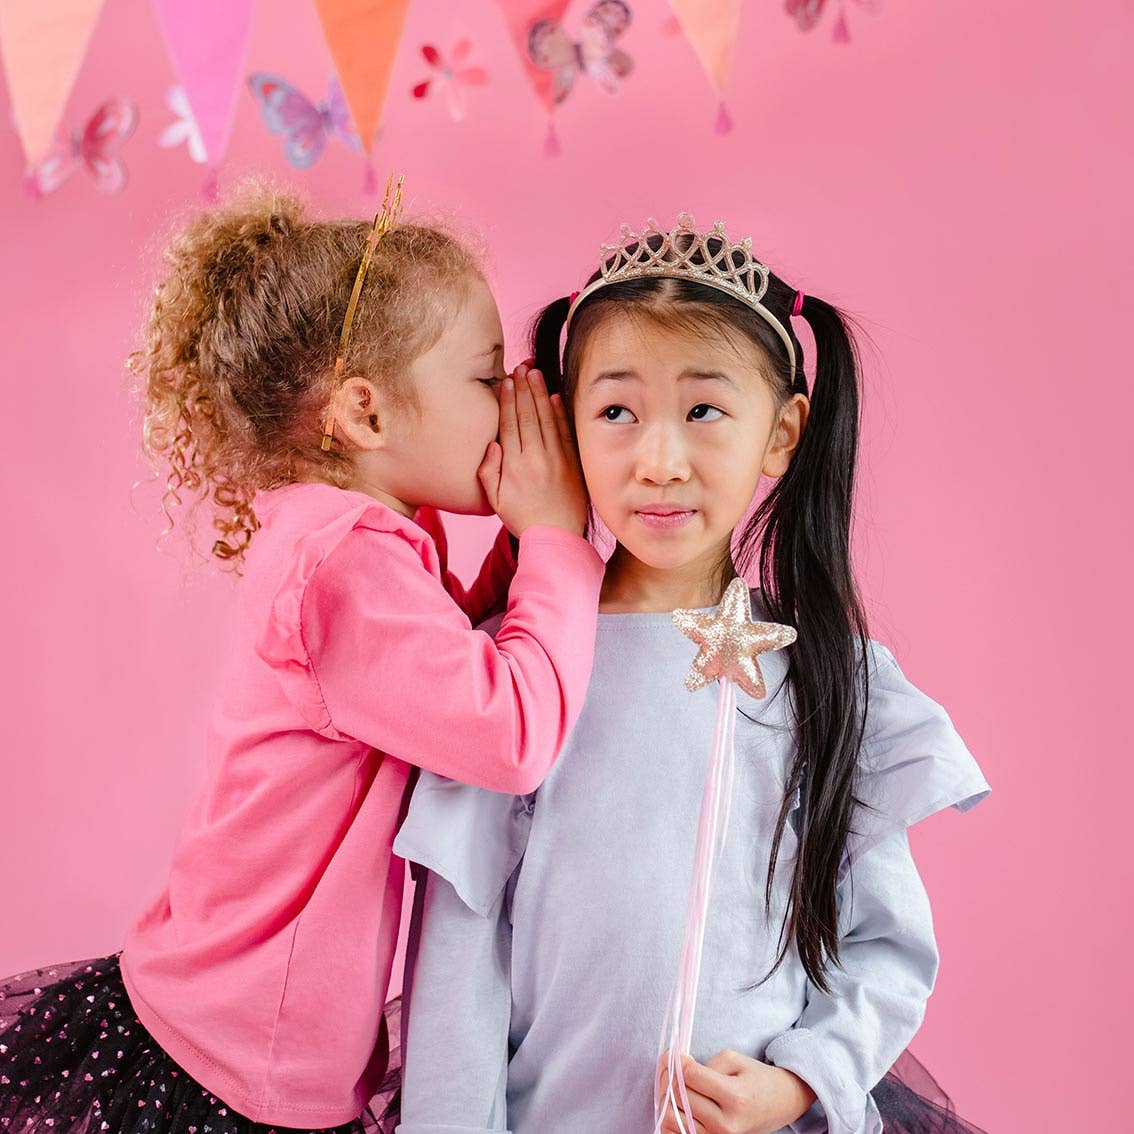 Pink and Gold Wand & Tiara Set - Kid's Dress Up Accessory